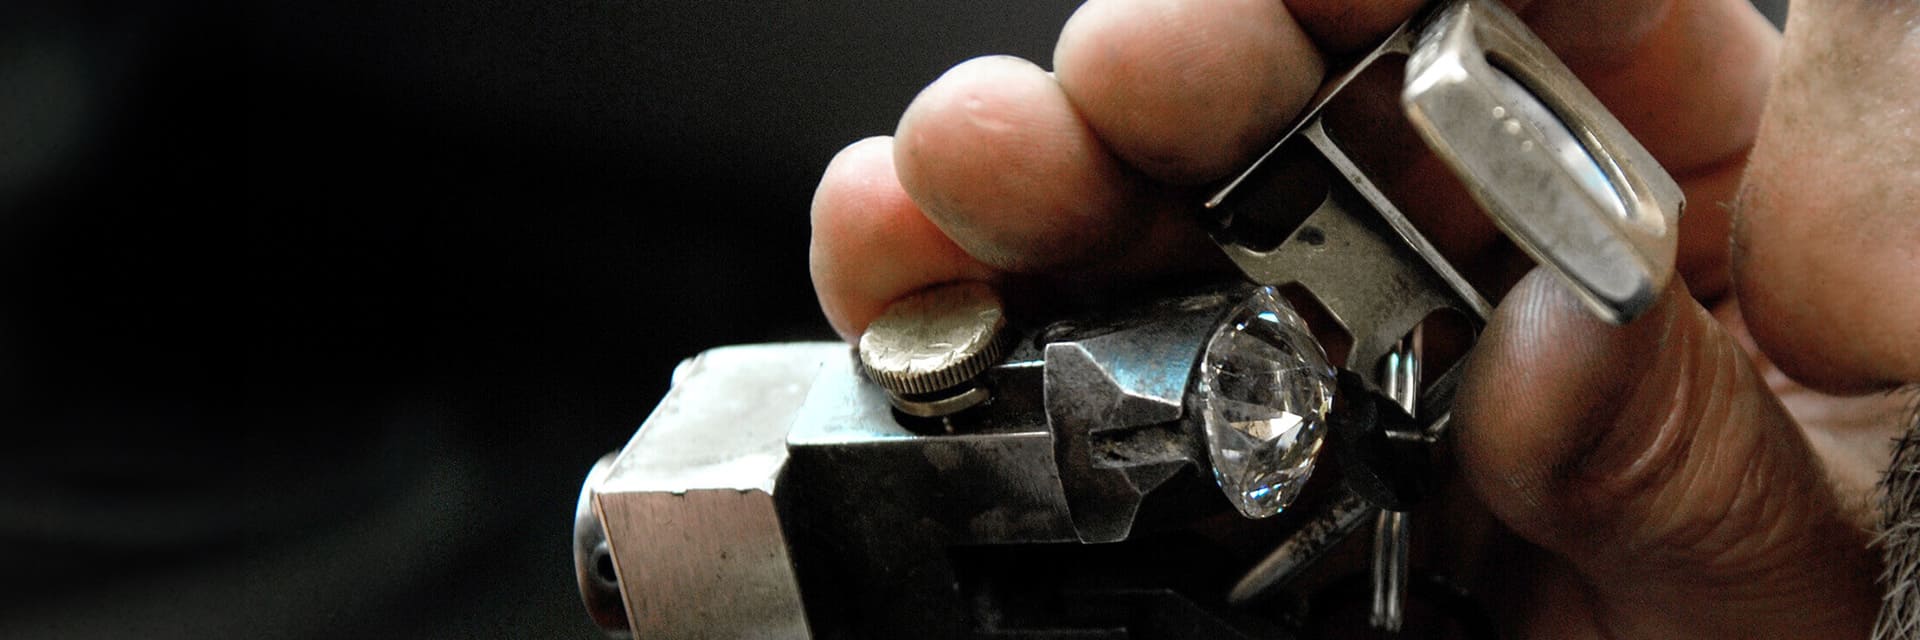 A man is looking through a diamond lens to inspect a diamond